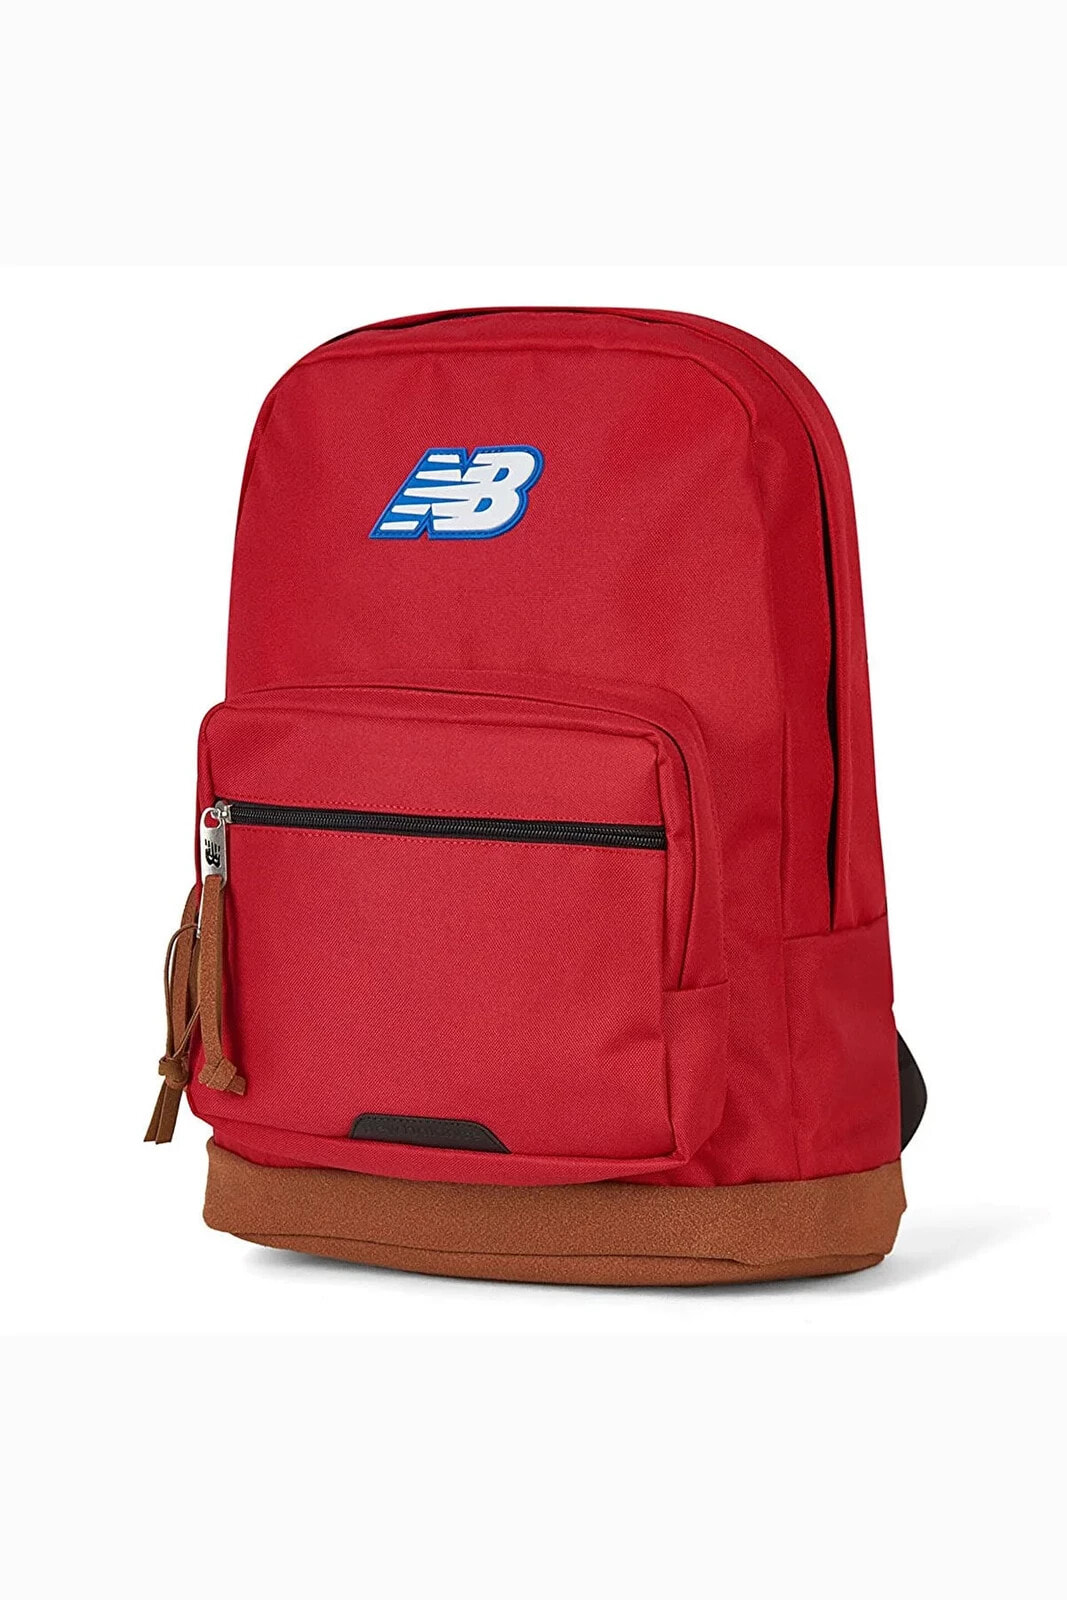 Çanta Nb Backpack Anb3202-red